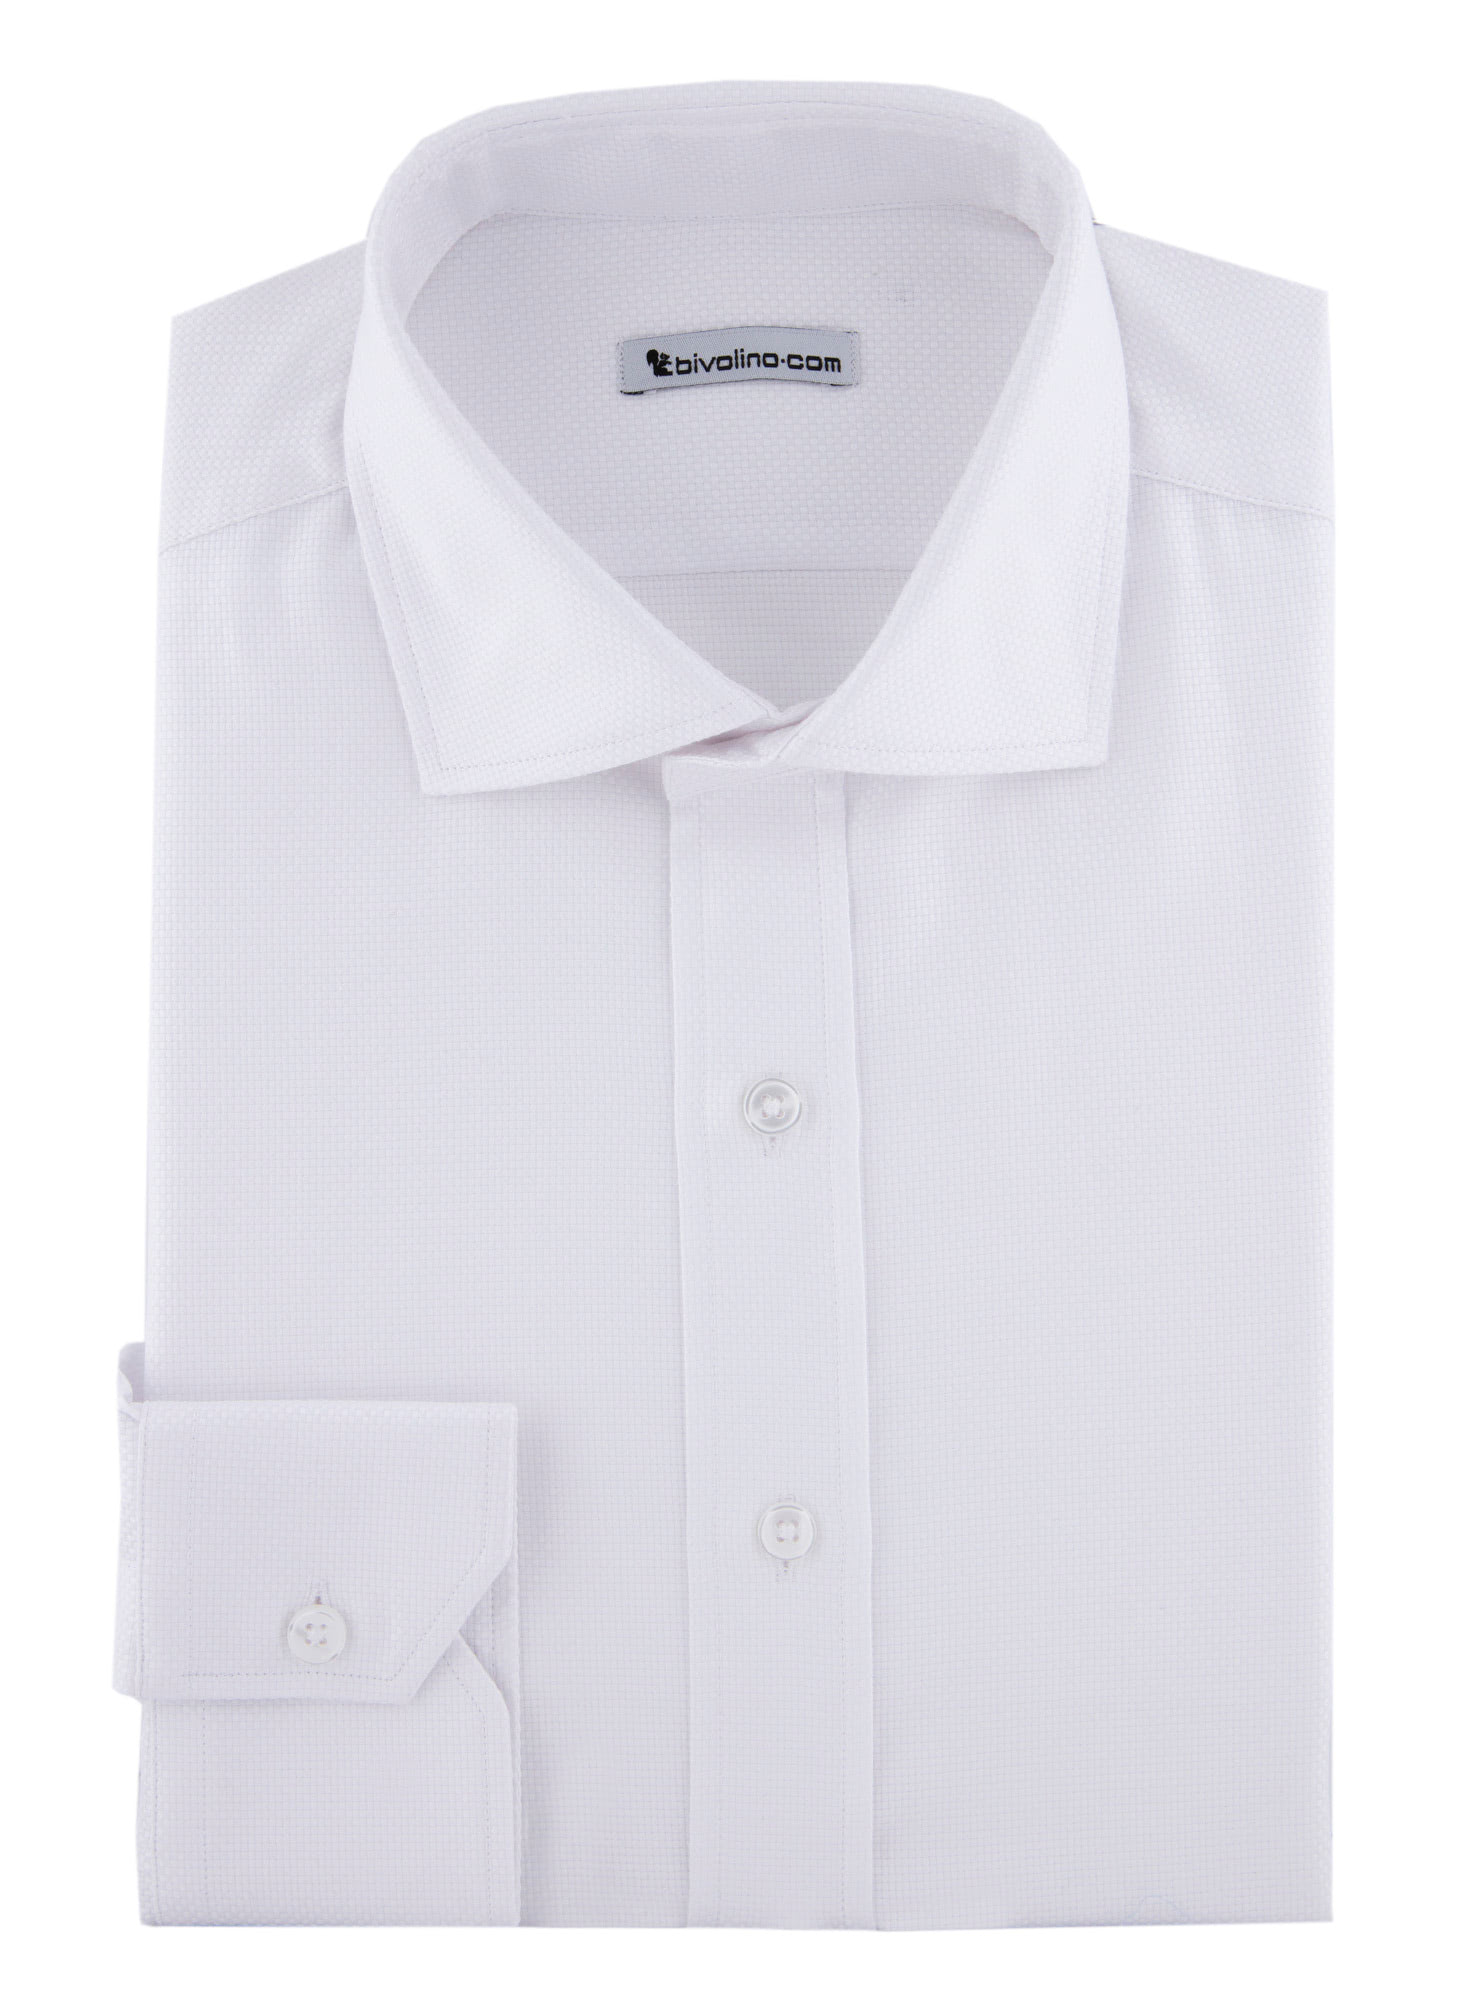 ORGIANO - Camicia oxford bianca royal dobby - BEDFORD 1